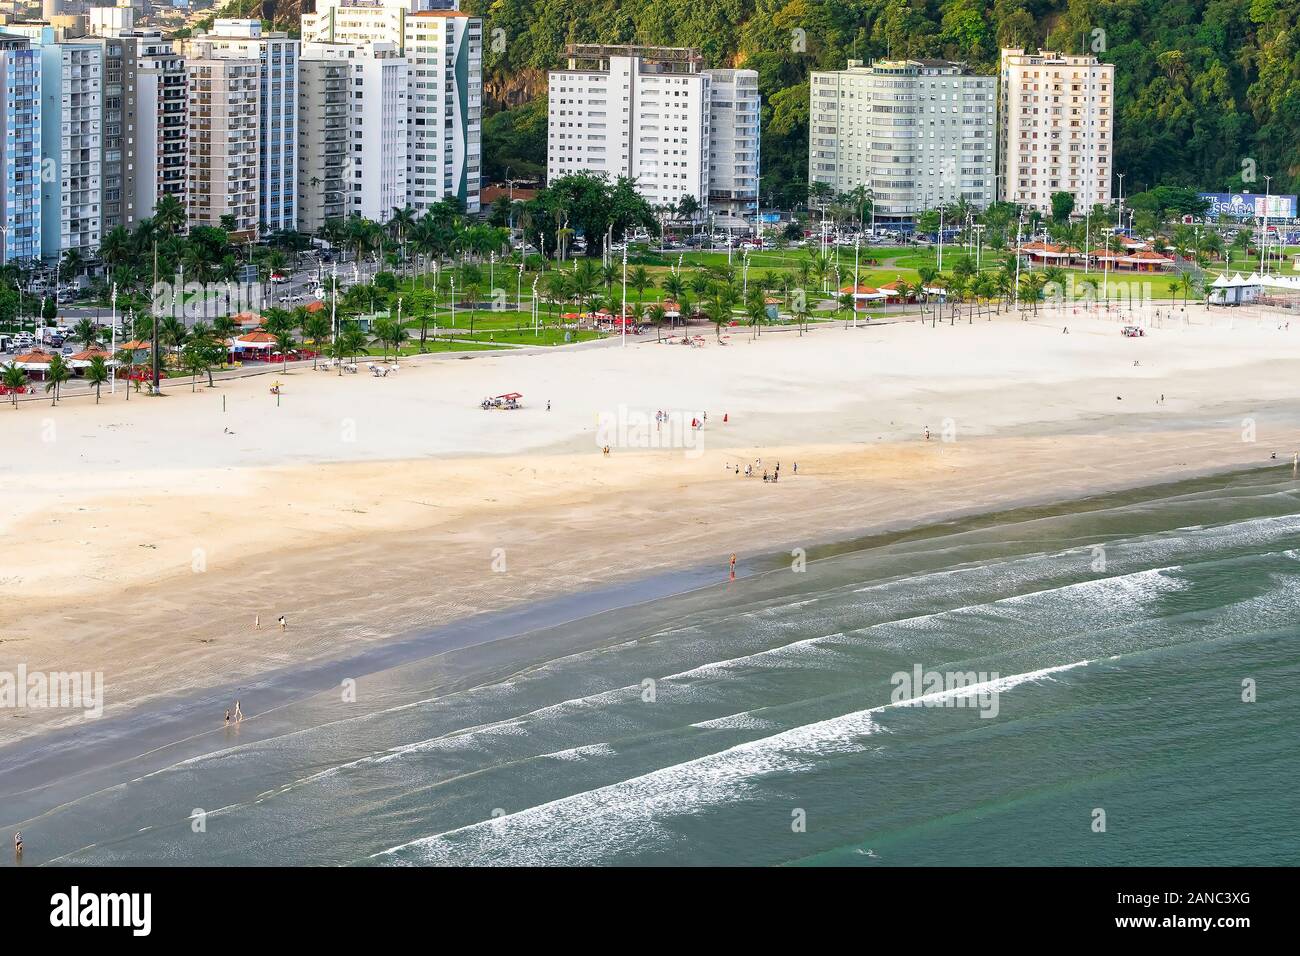 Sao Vicente - SP, Brazil - November 21, 2019: Aerial view of a Praia do Itarare beach - Sao Vicente SP Brazil. Stock Photo